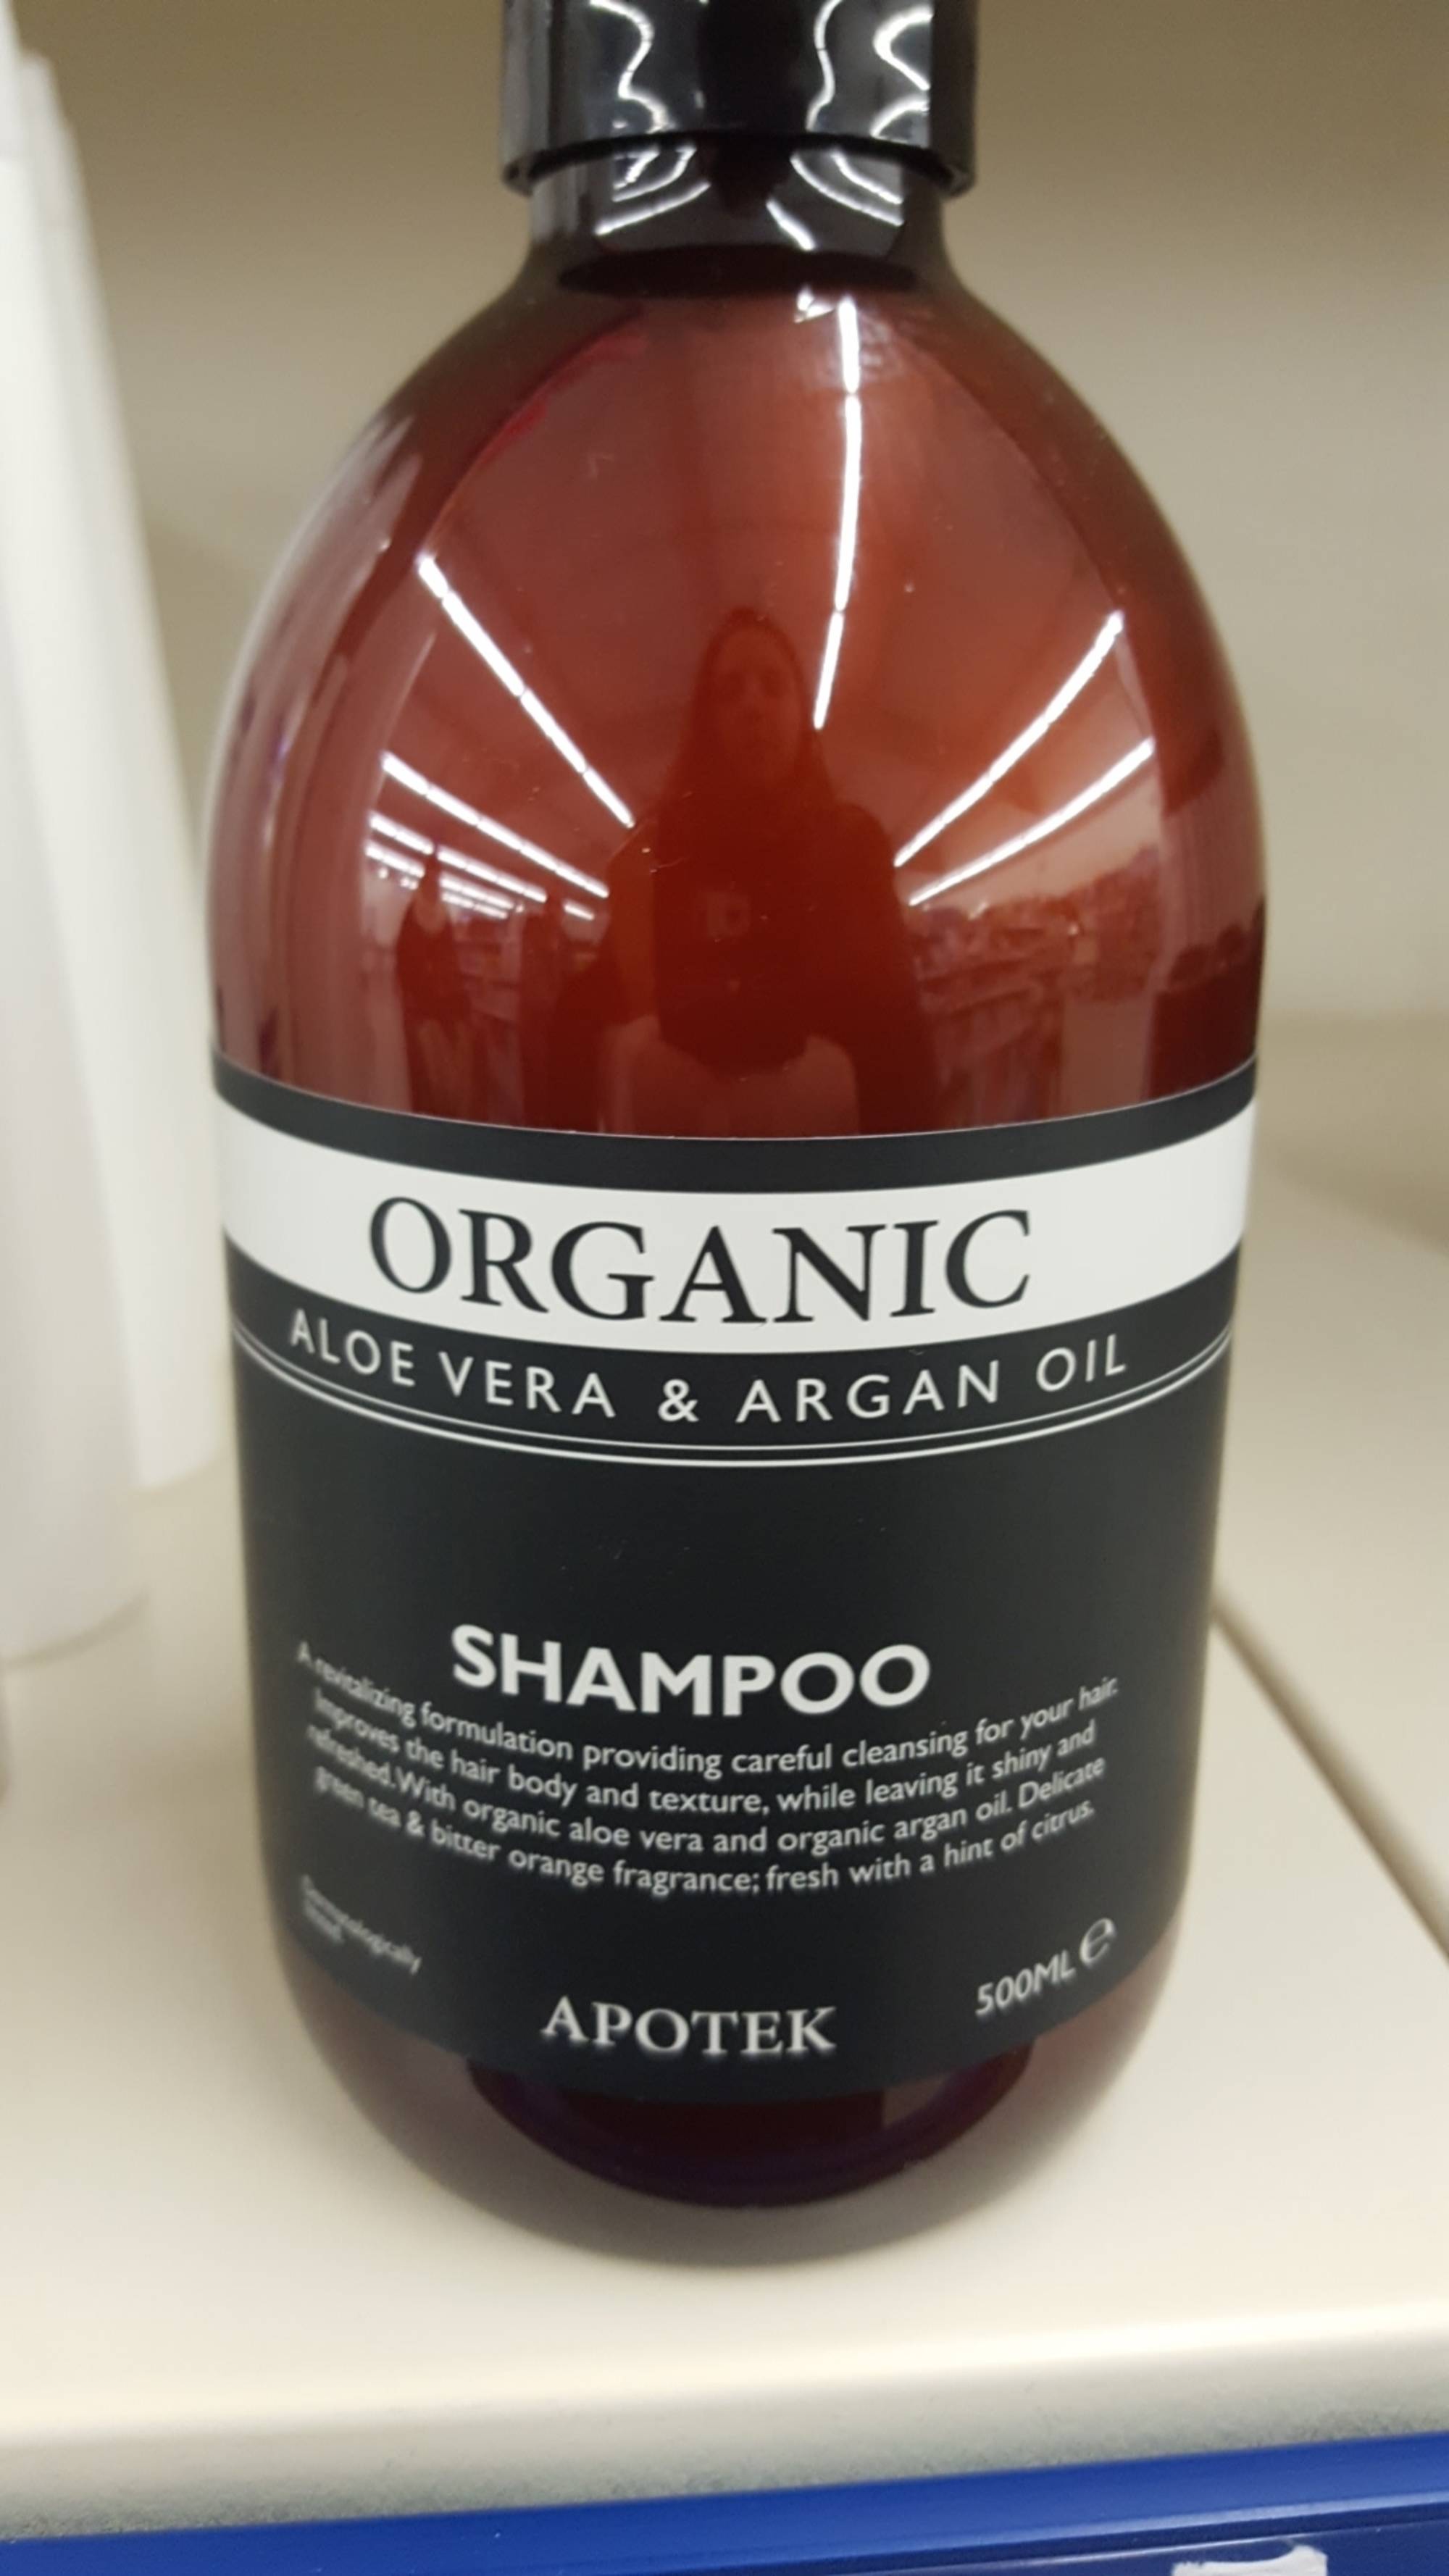 APOTEK - Organic - Shampooing aloé vera & argan oil